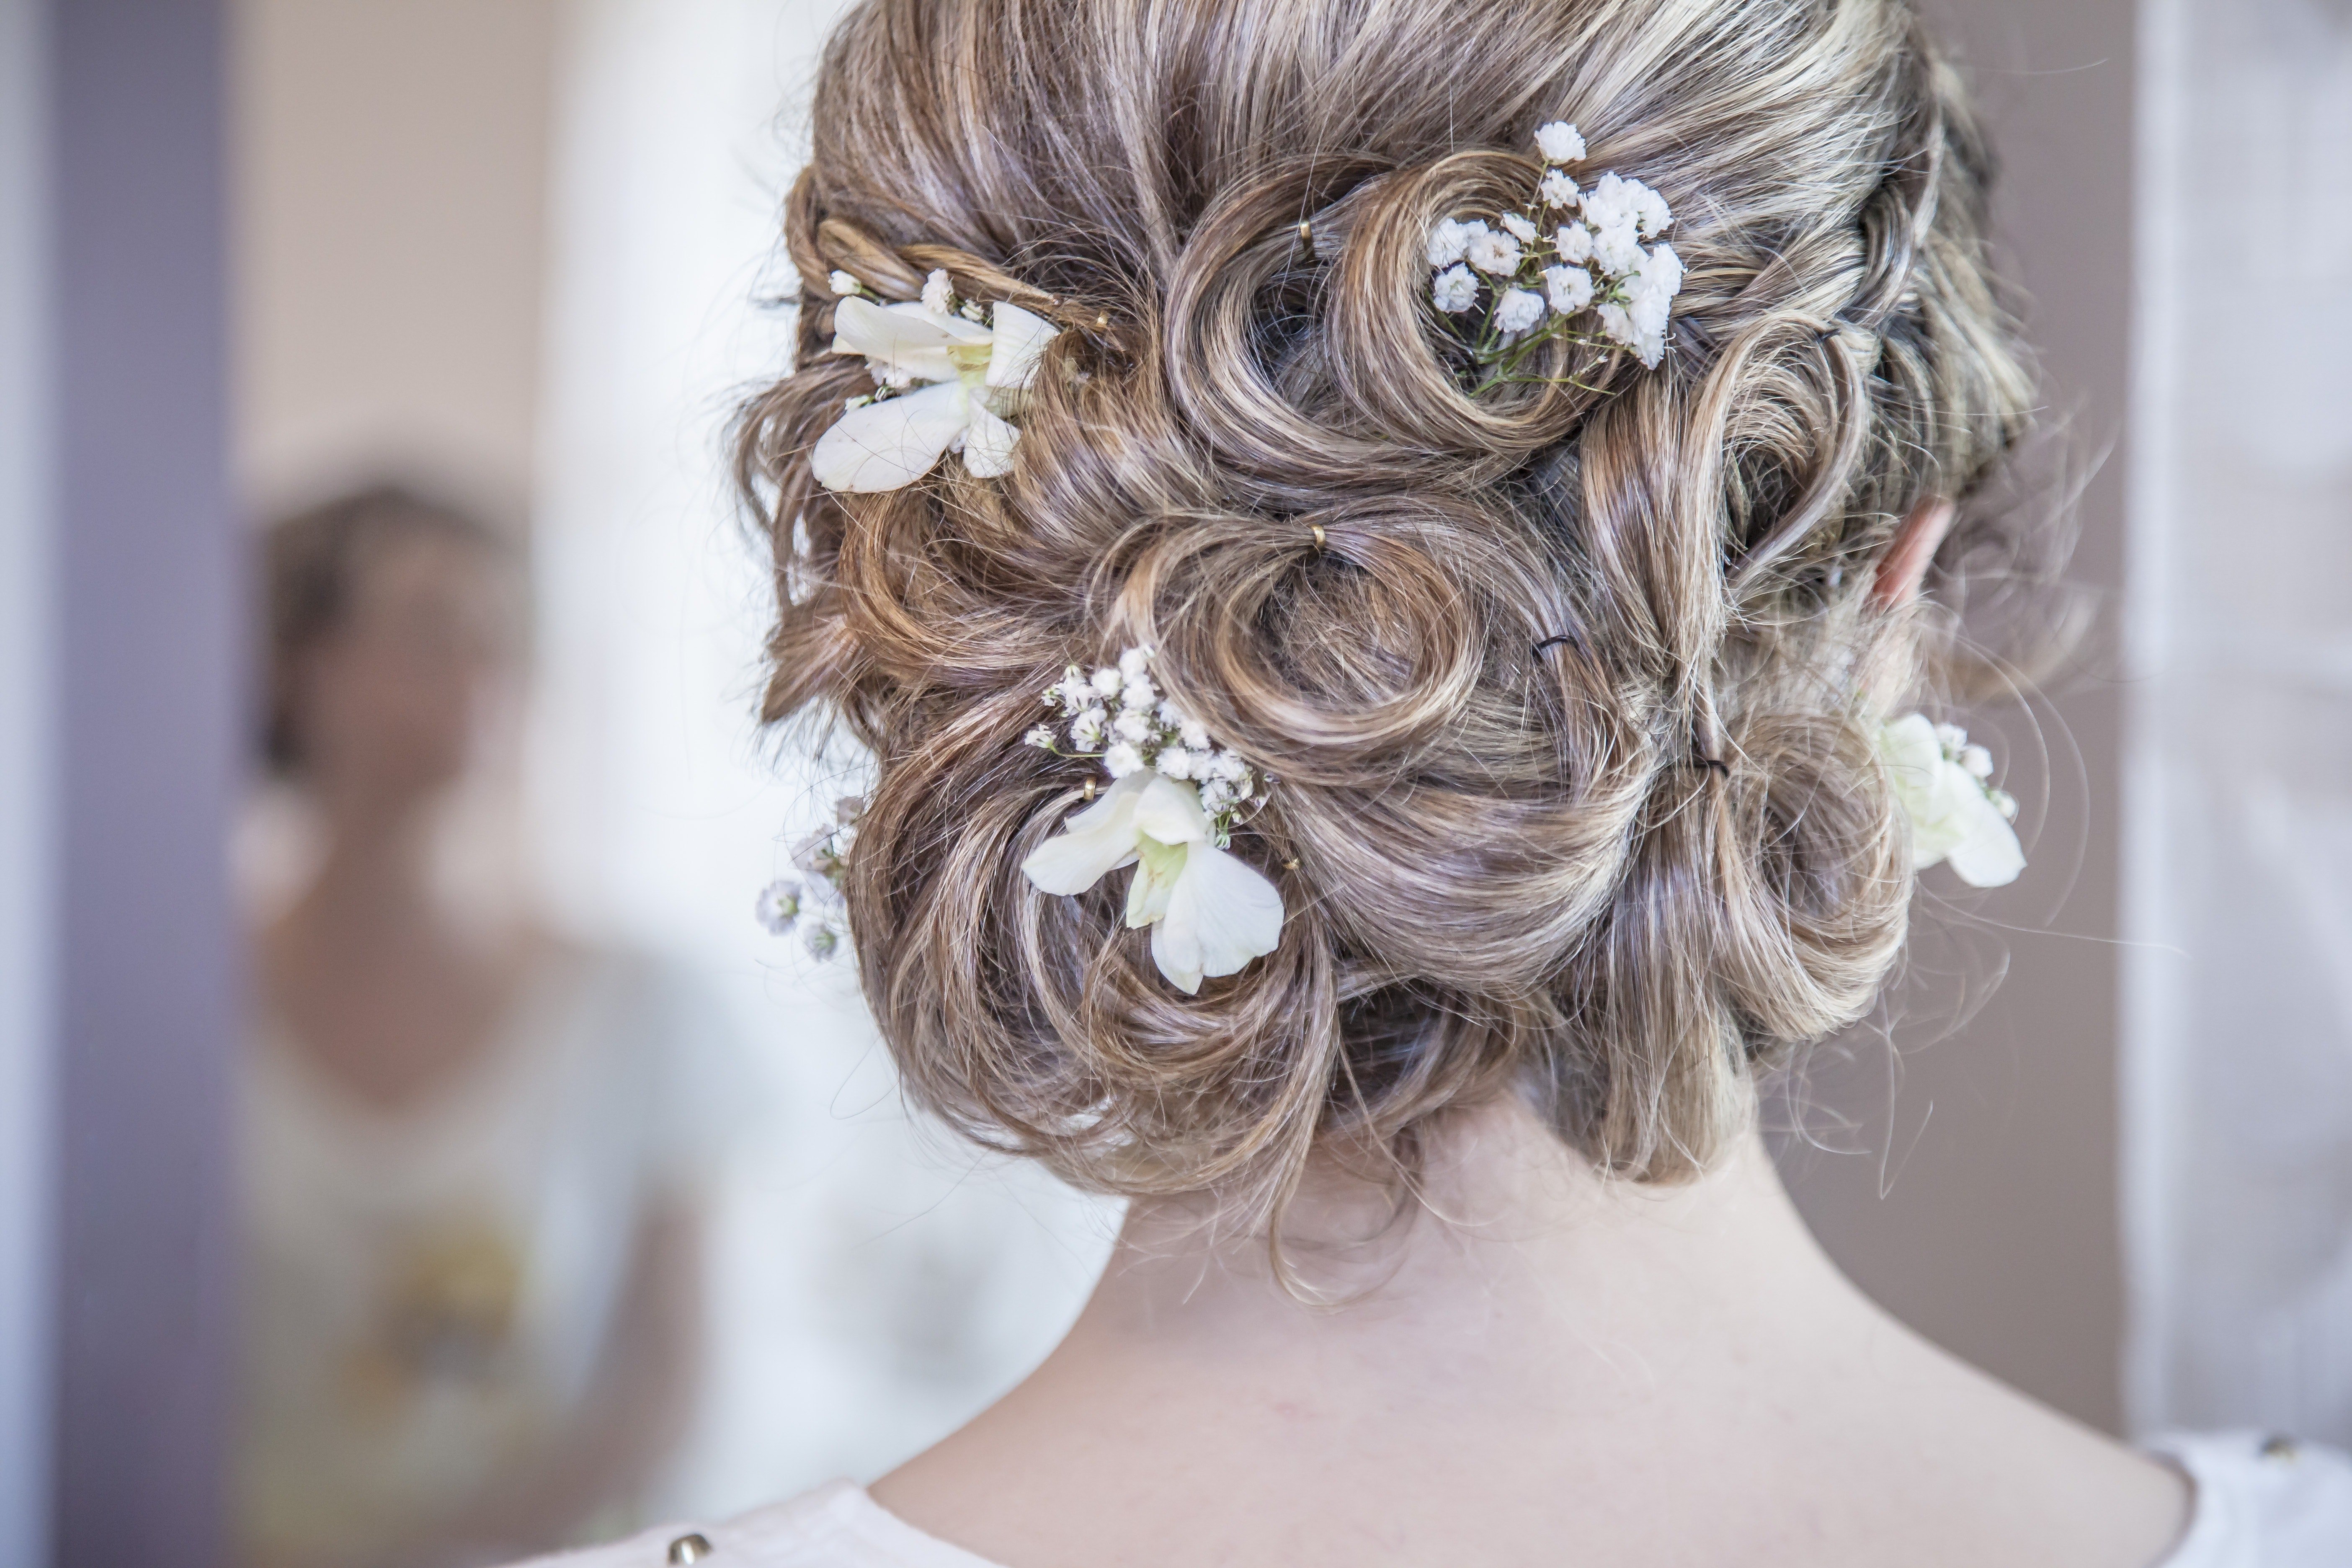 Peinado especial de una novia. | Foto: Pexels